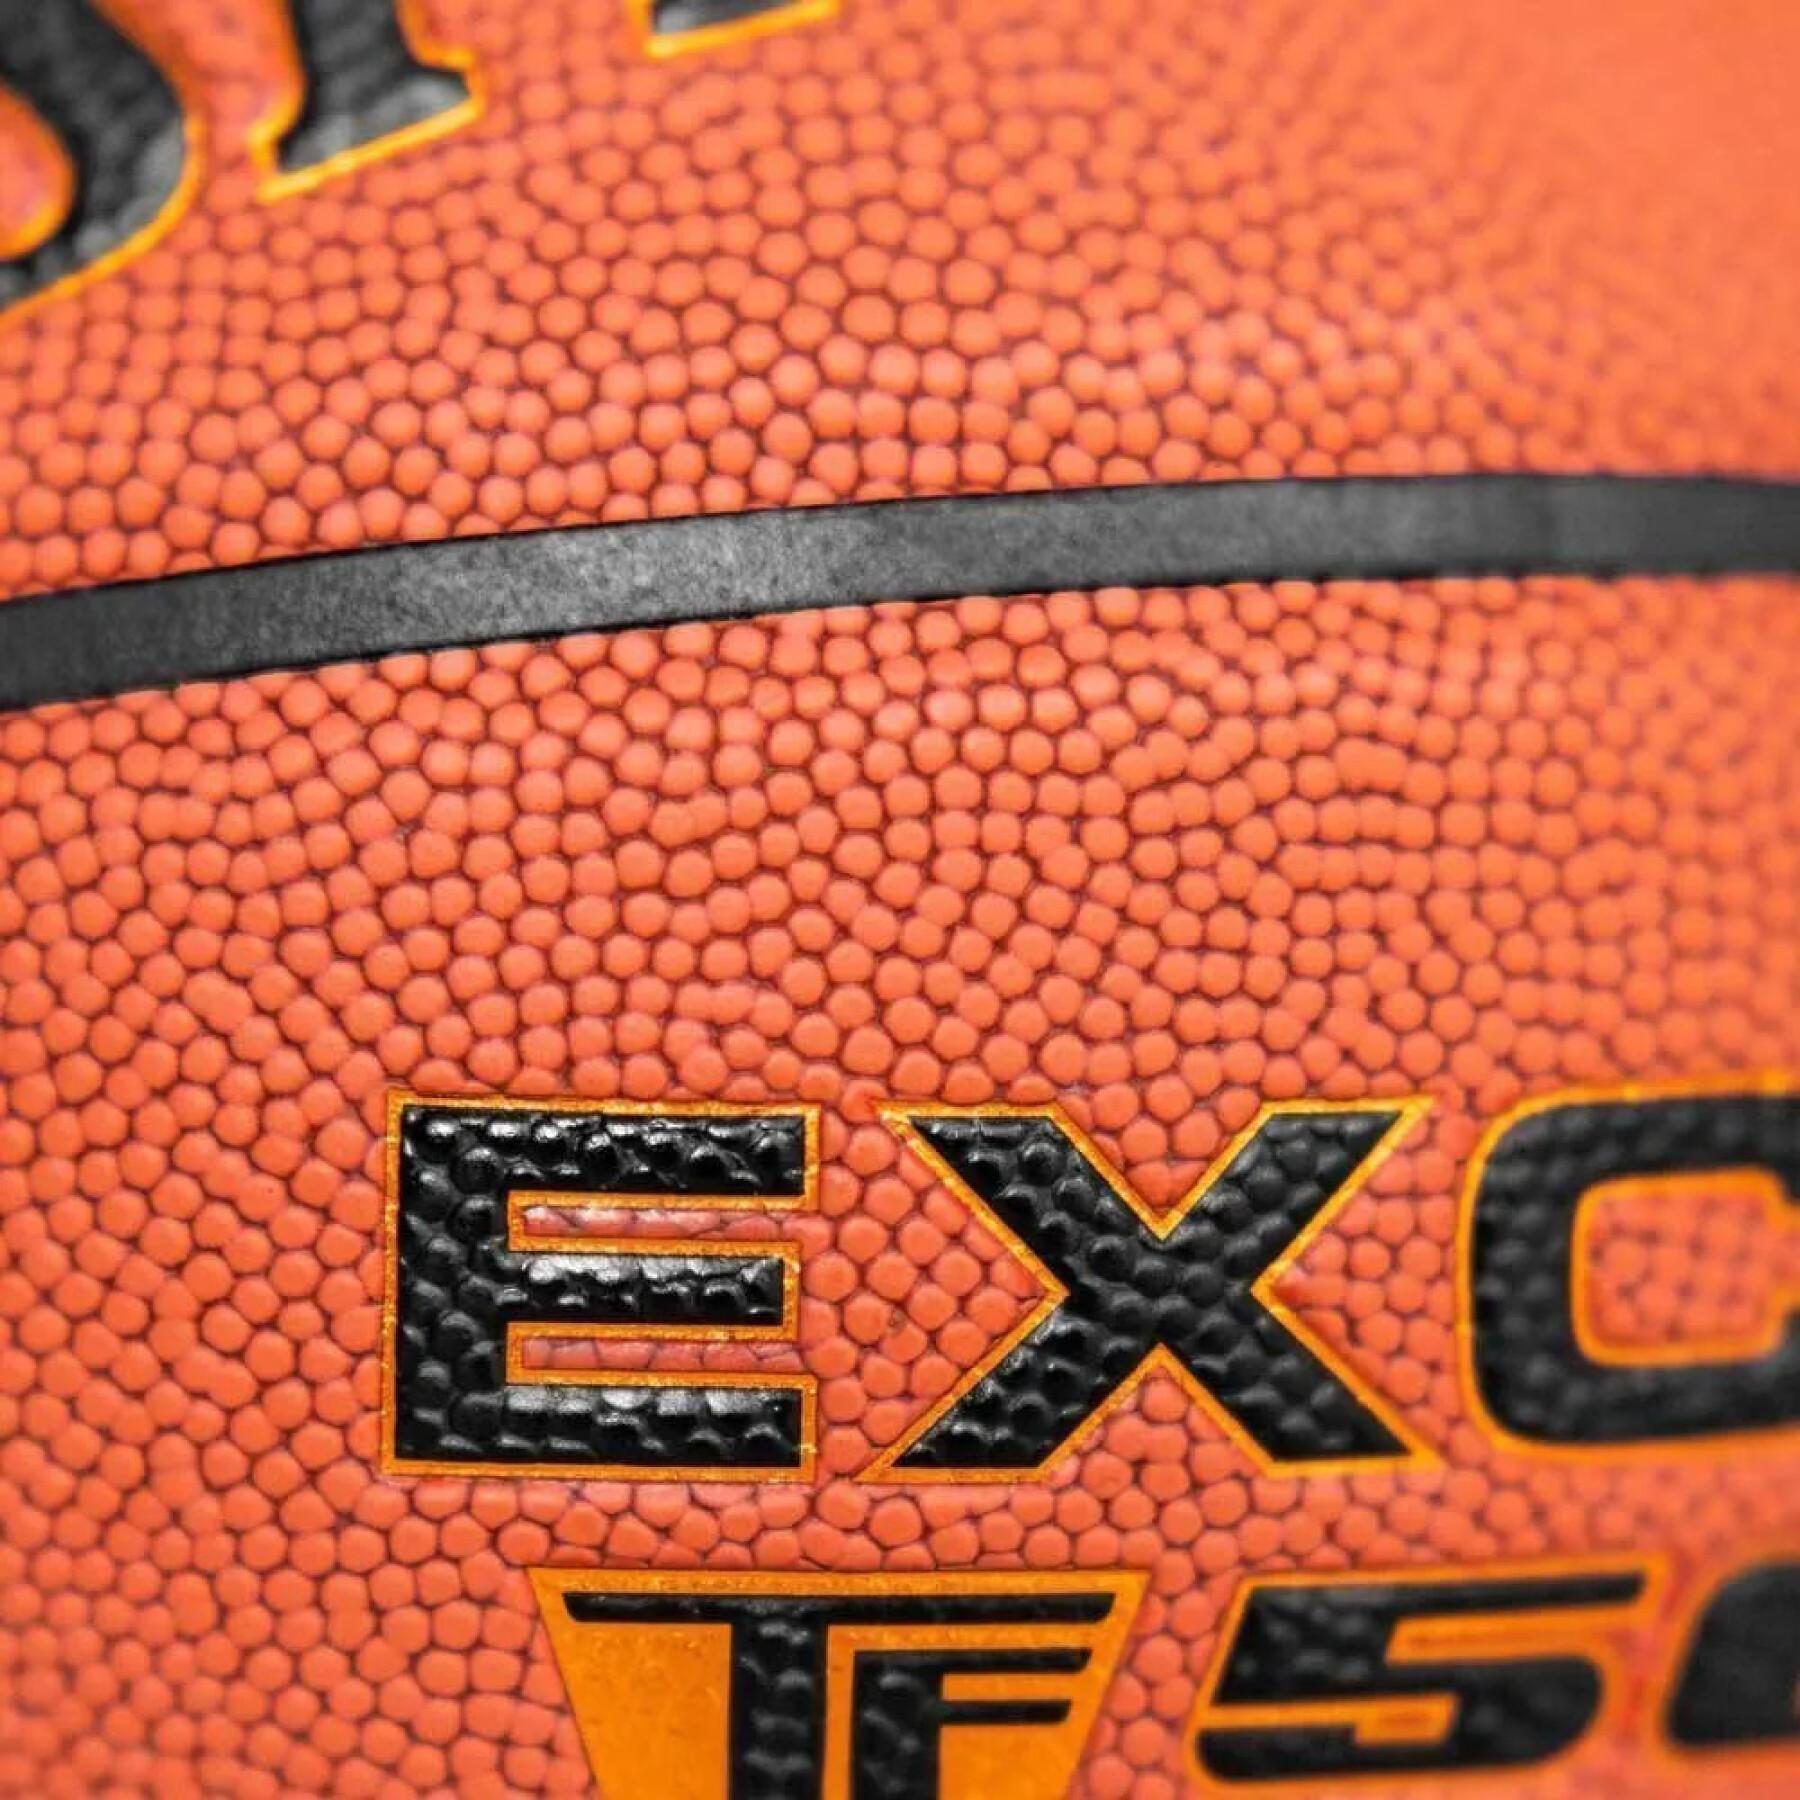 Basketball Spalding Excel TF-500 Composite